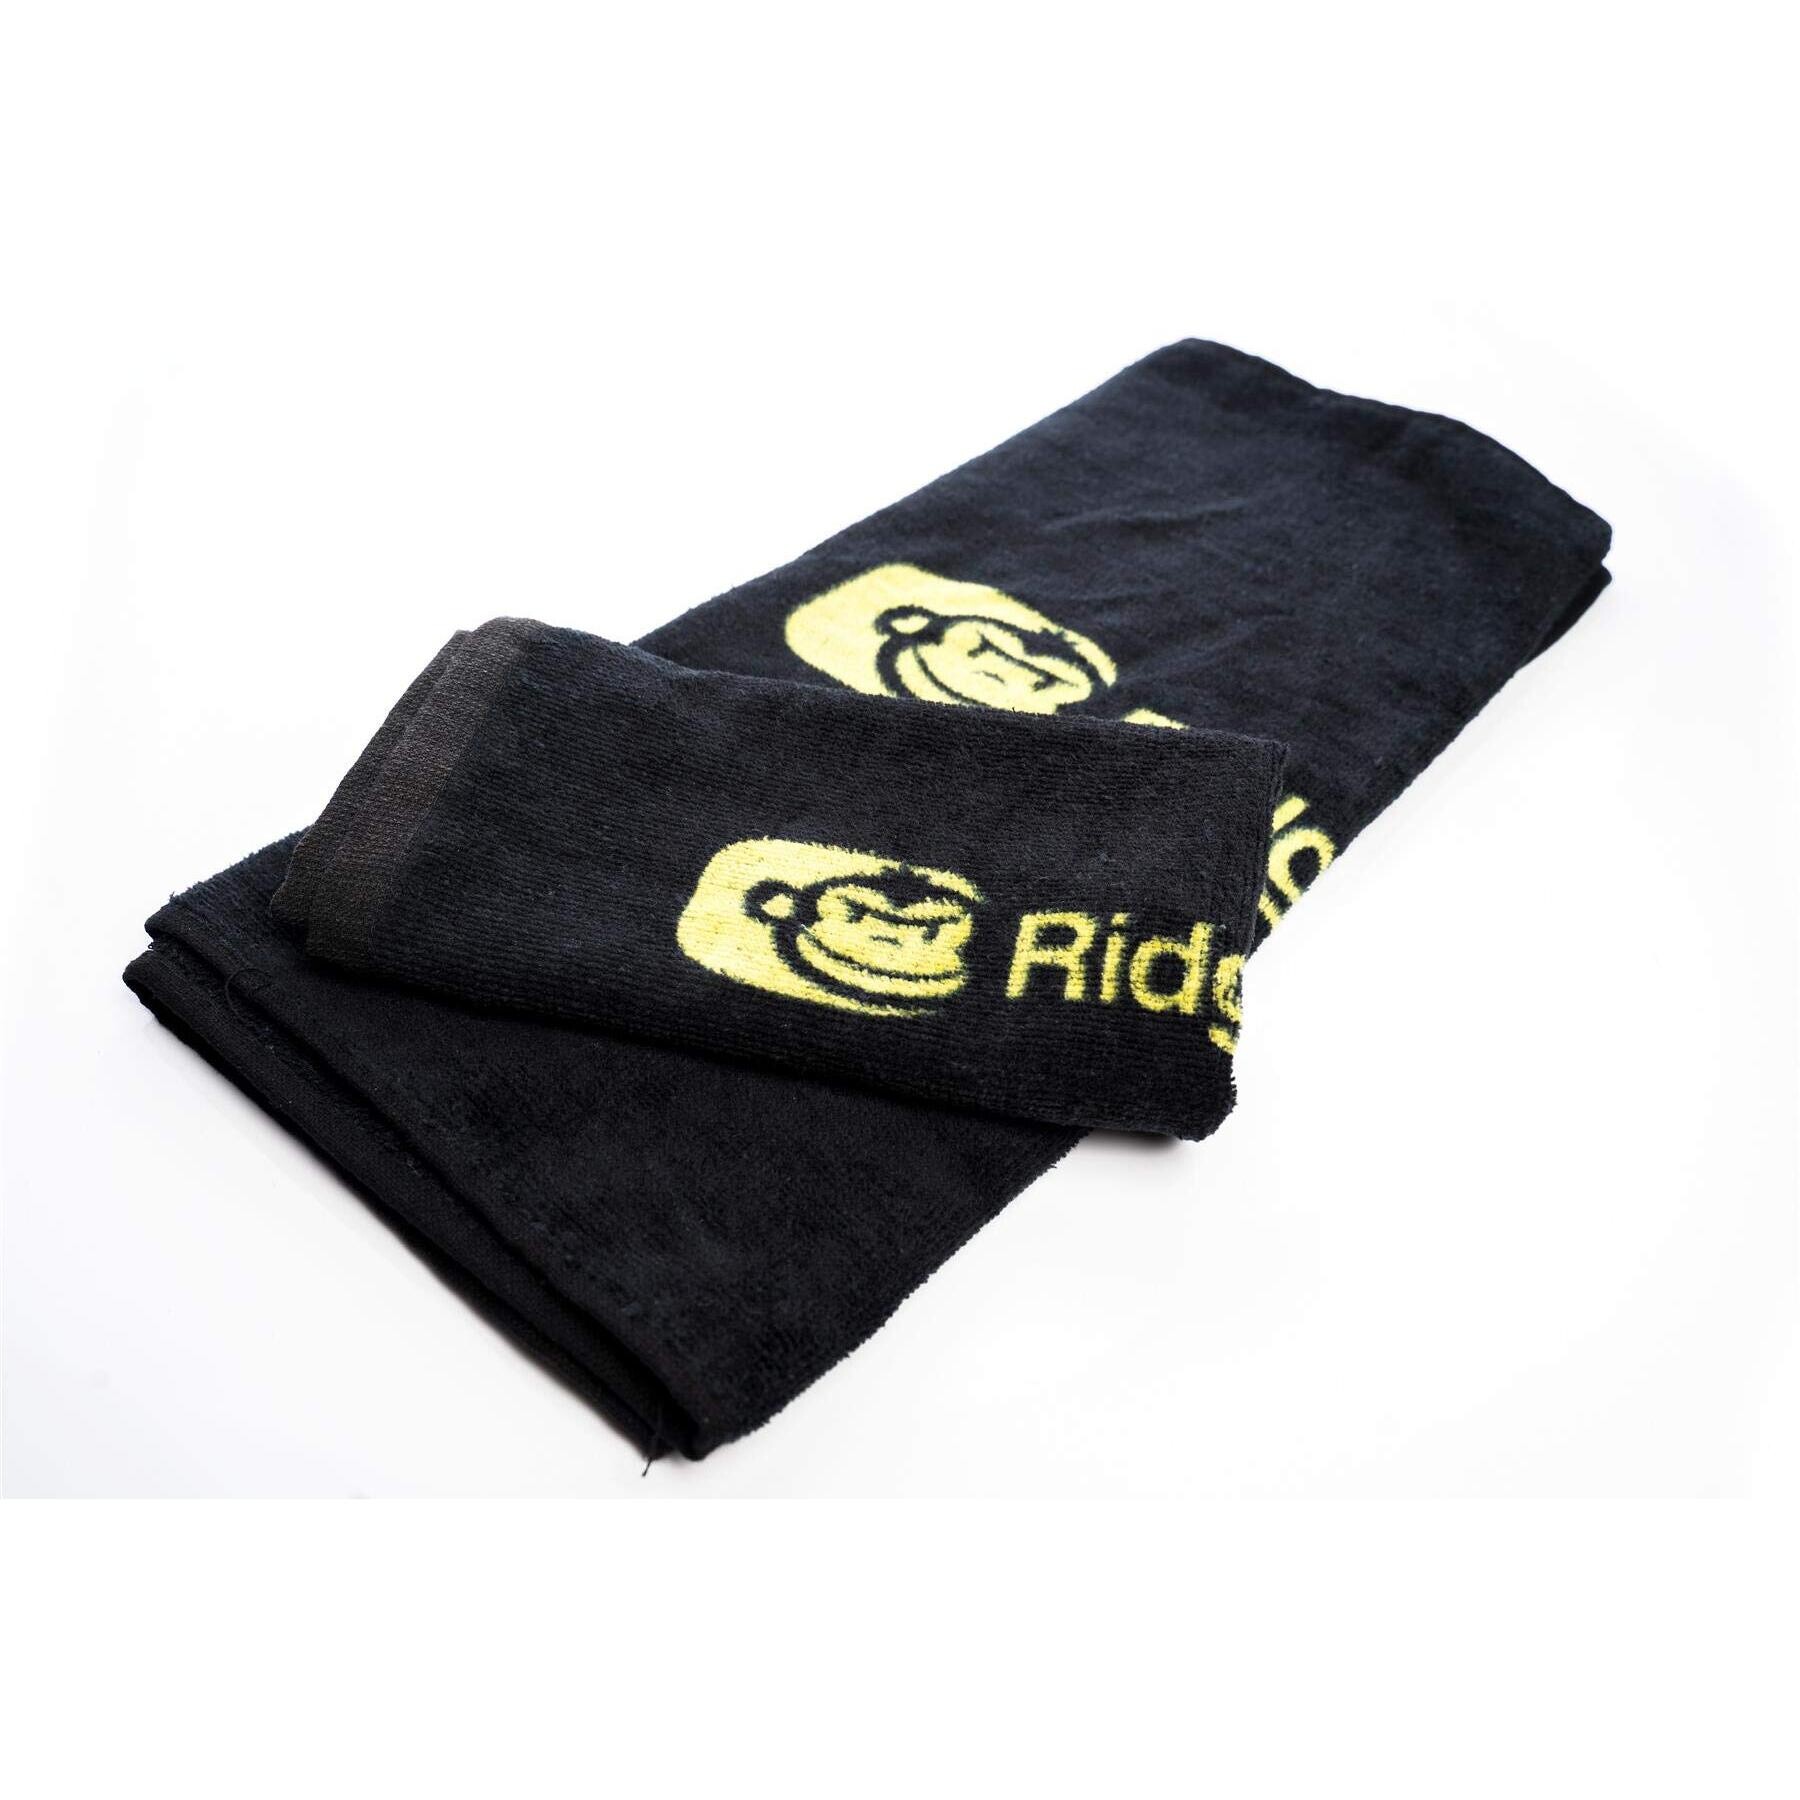 Pair of towels Ridge Monkey LX